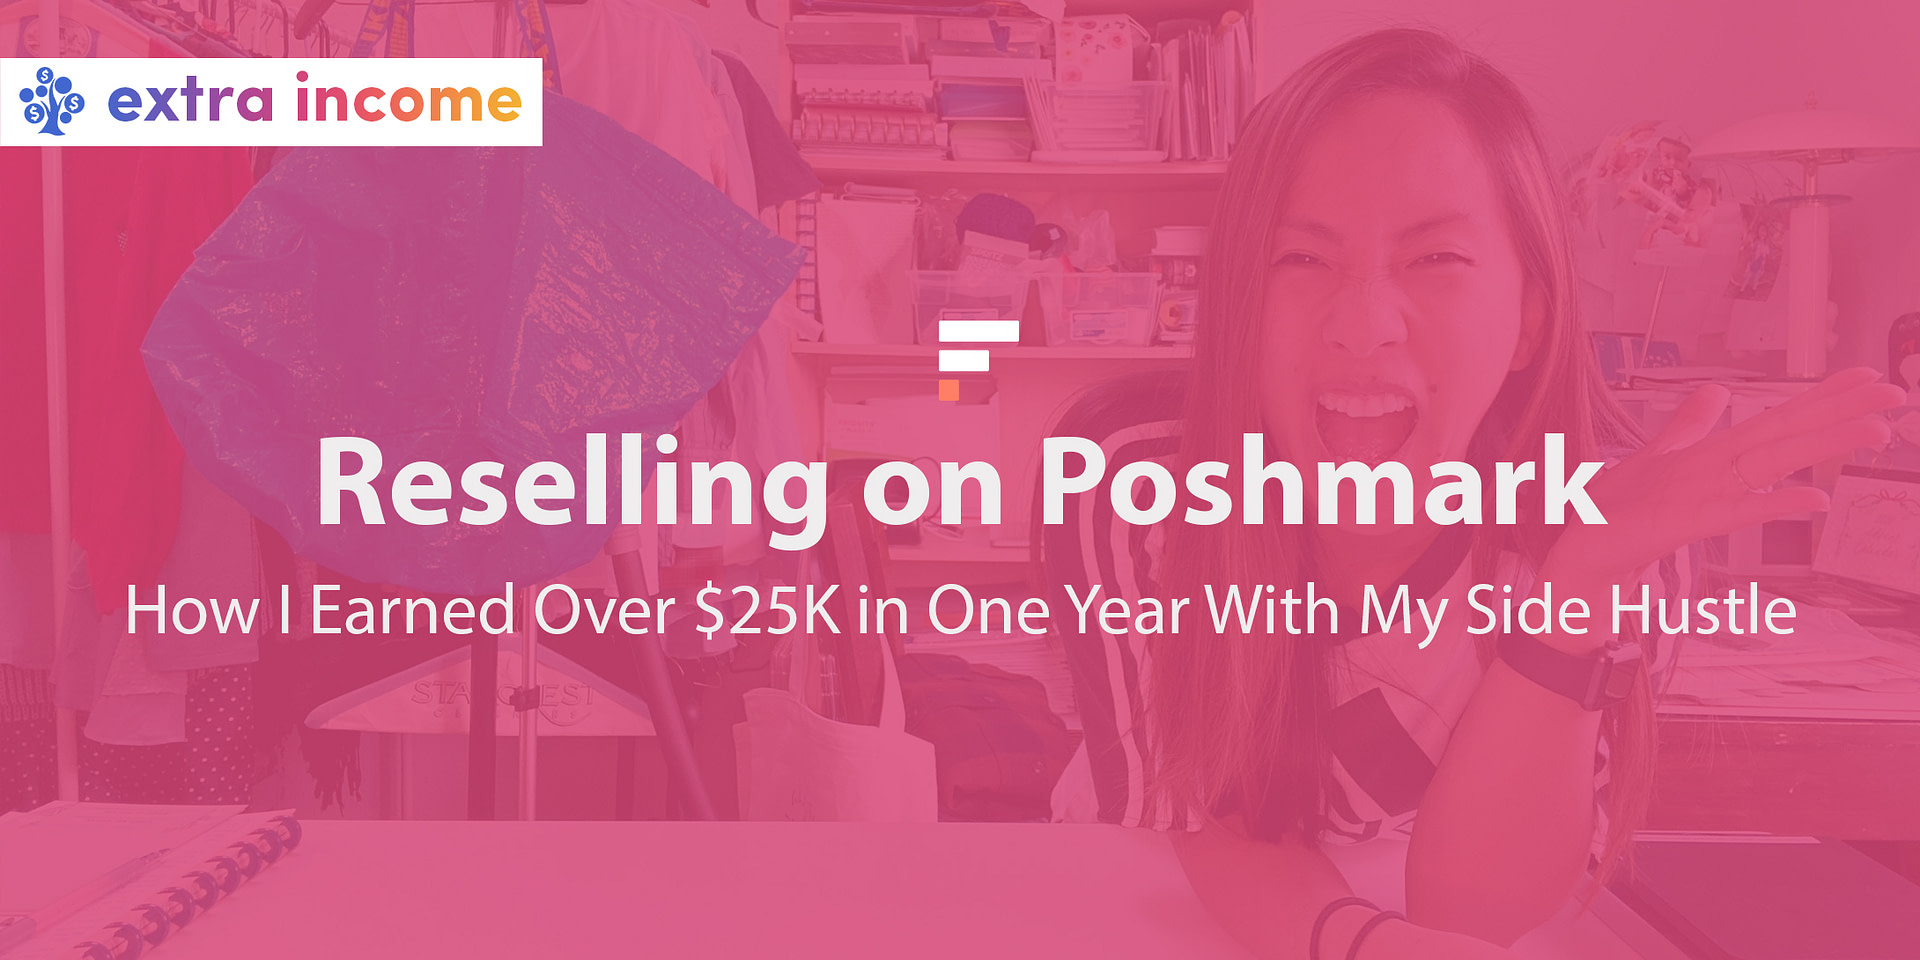 The Poshmark Side Hustle